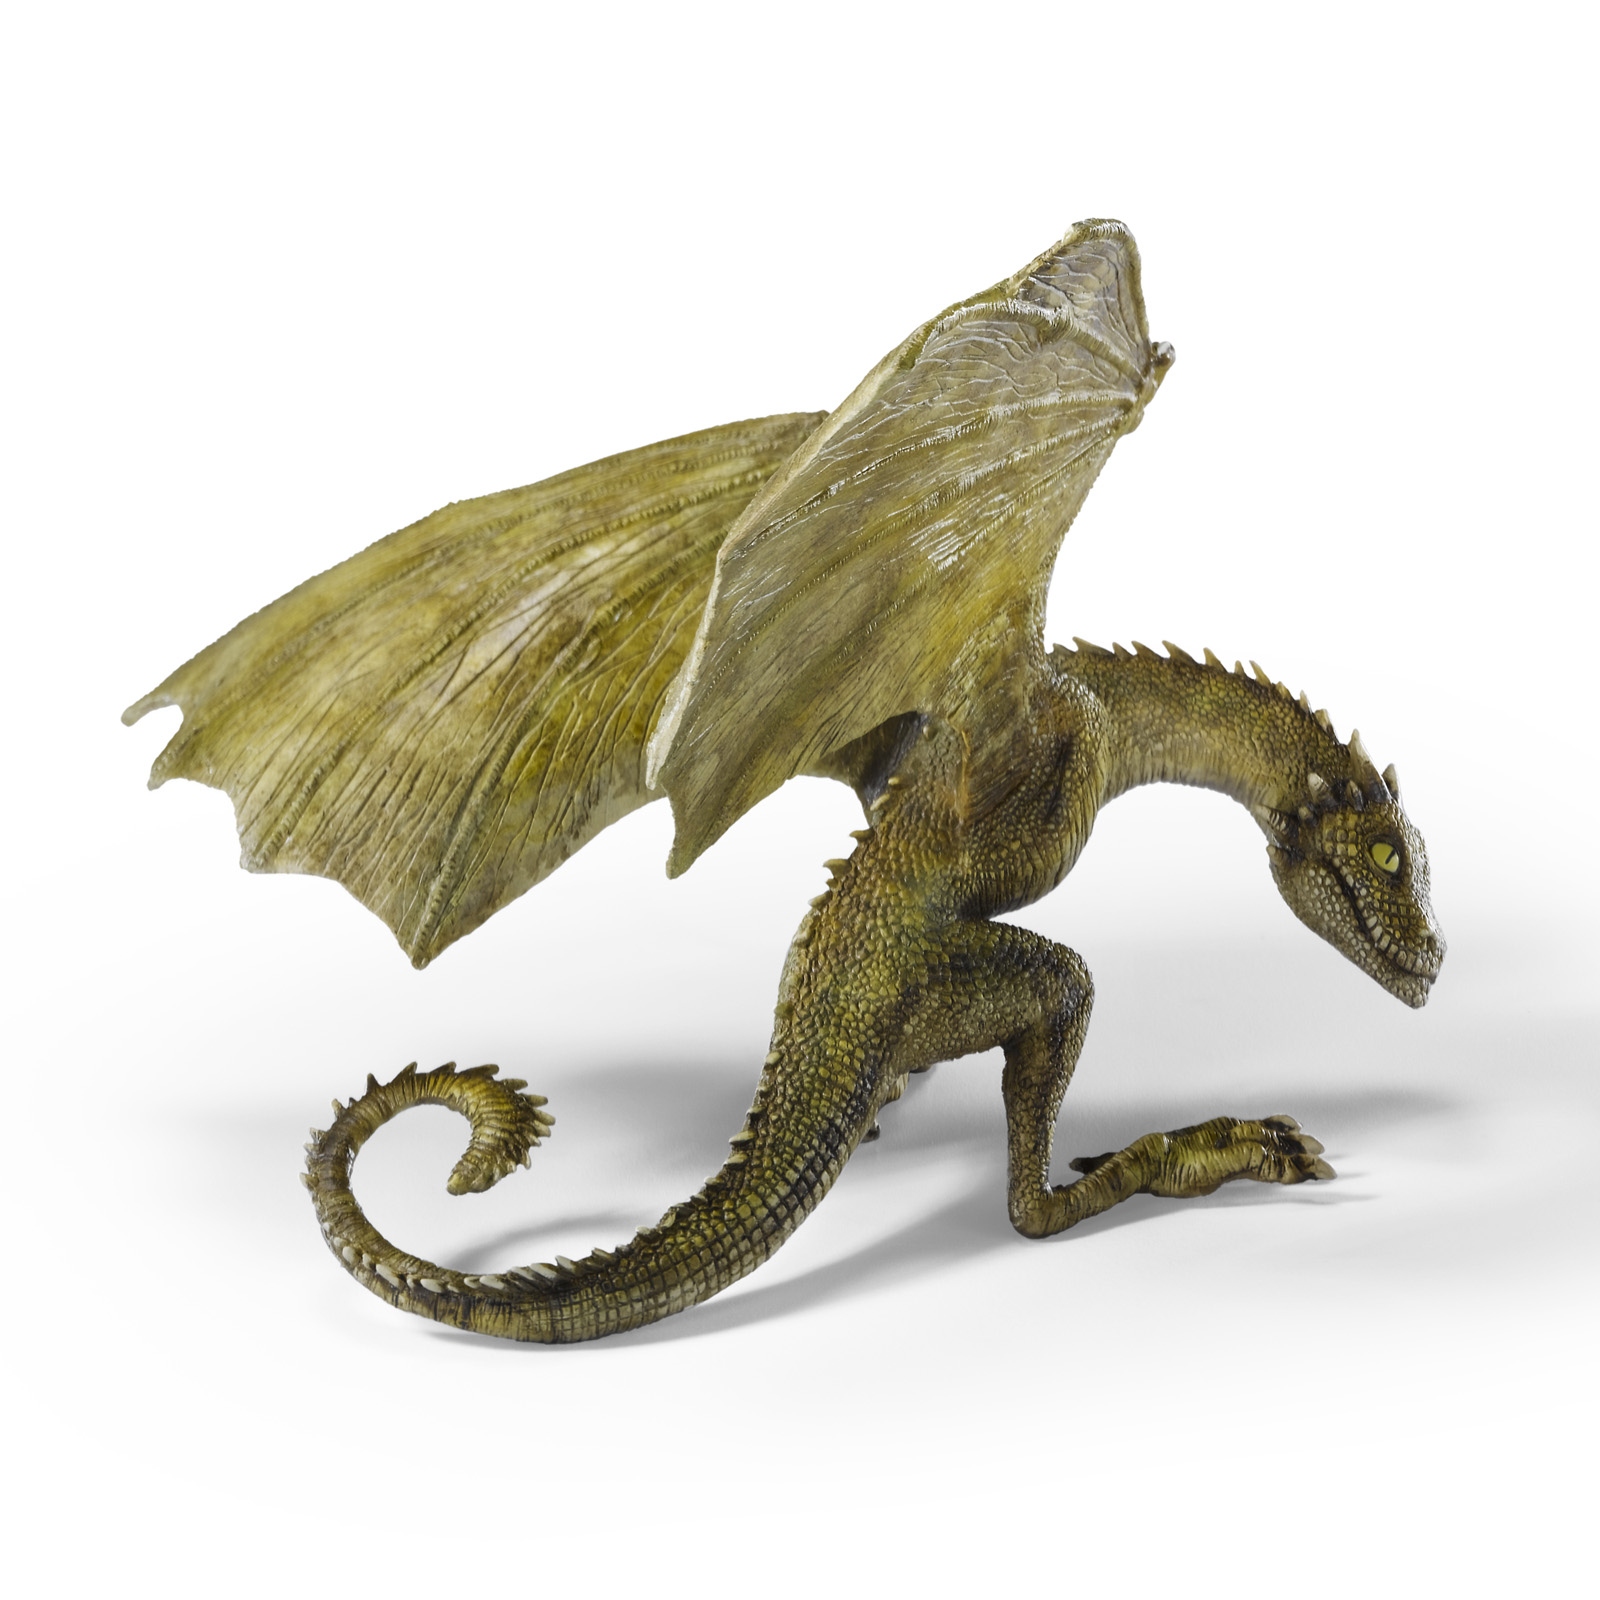 Offiziell Lizenzierte Game of Thrones Figur Rhaegal Baby Dragon Drache 